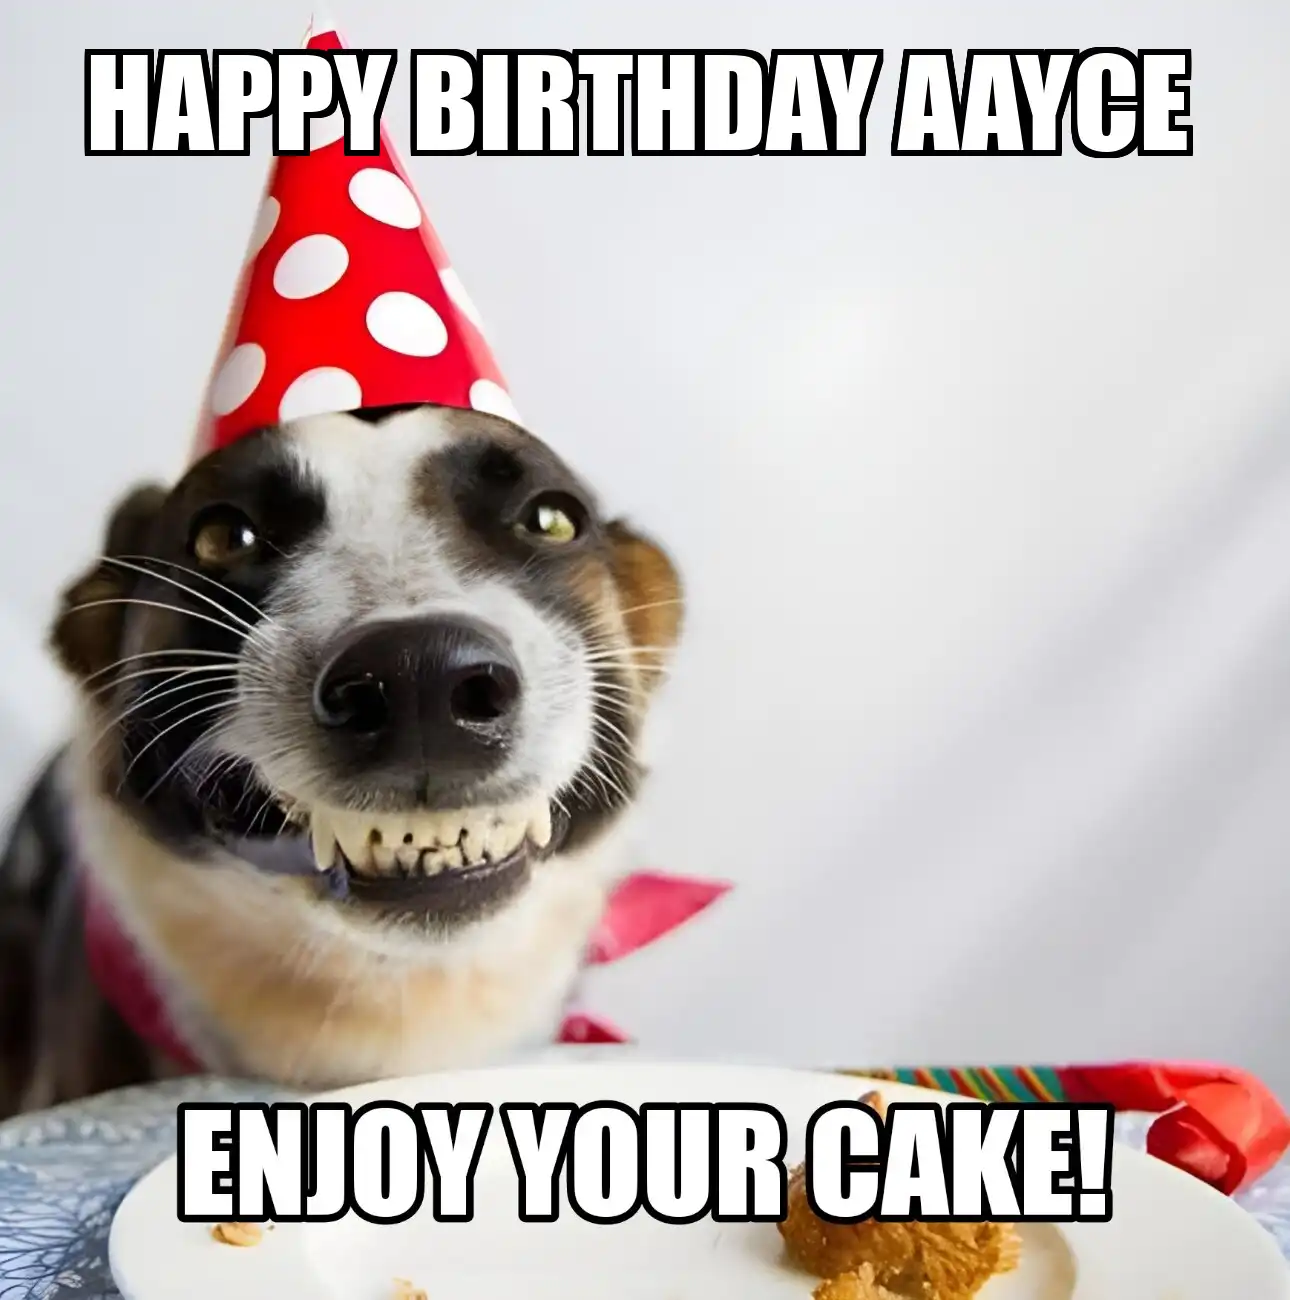 Happy Birthday Aayce Enjoy Your Cake Dog Meme